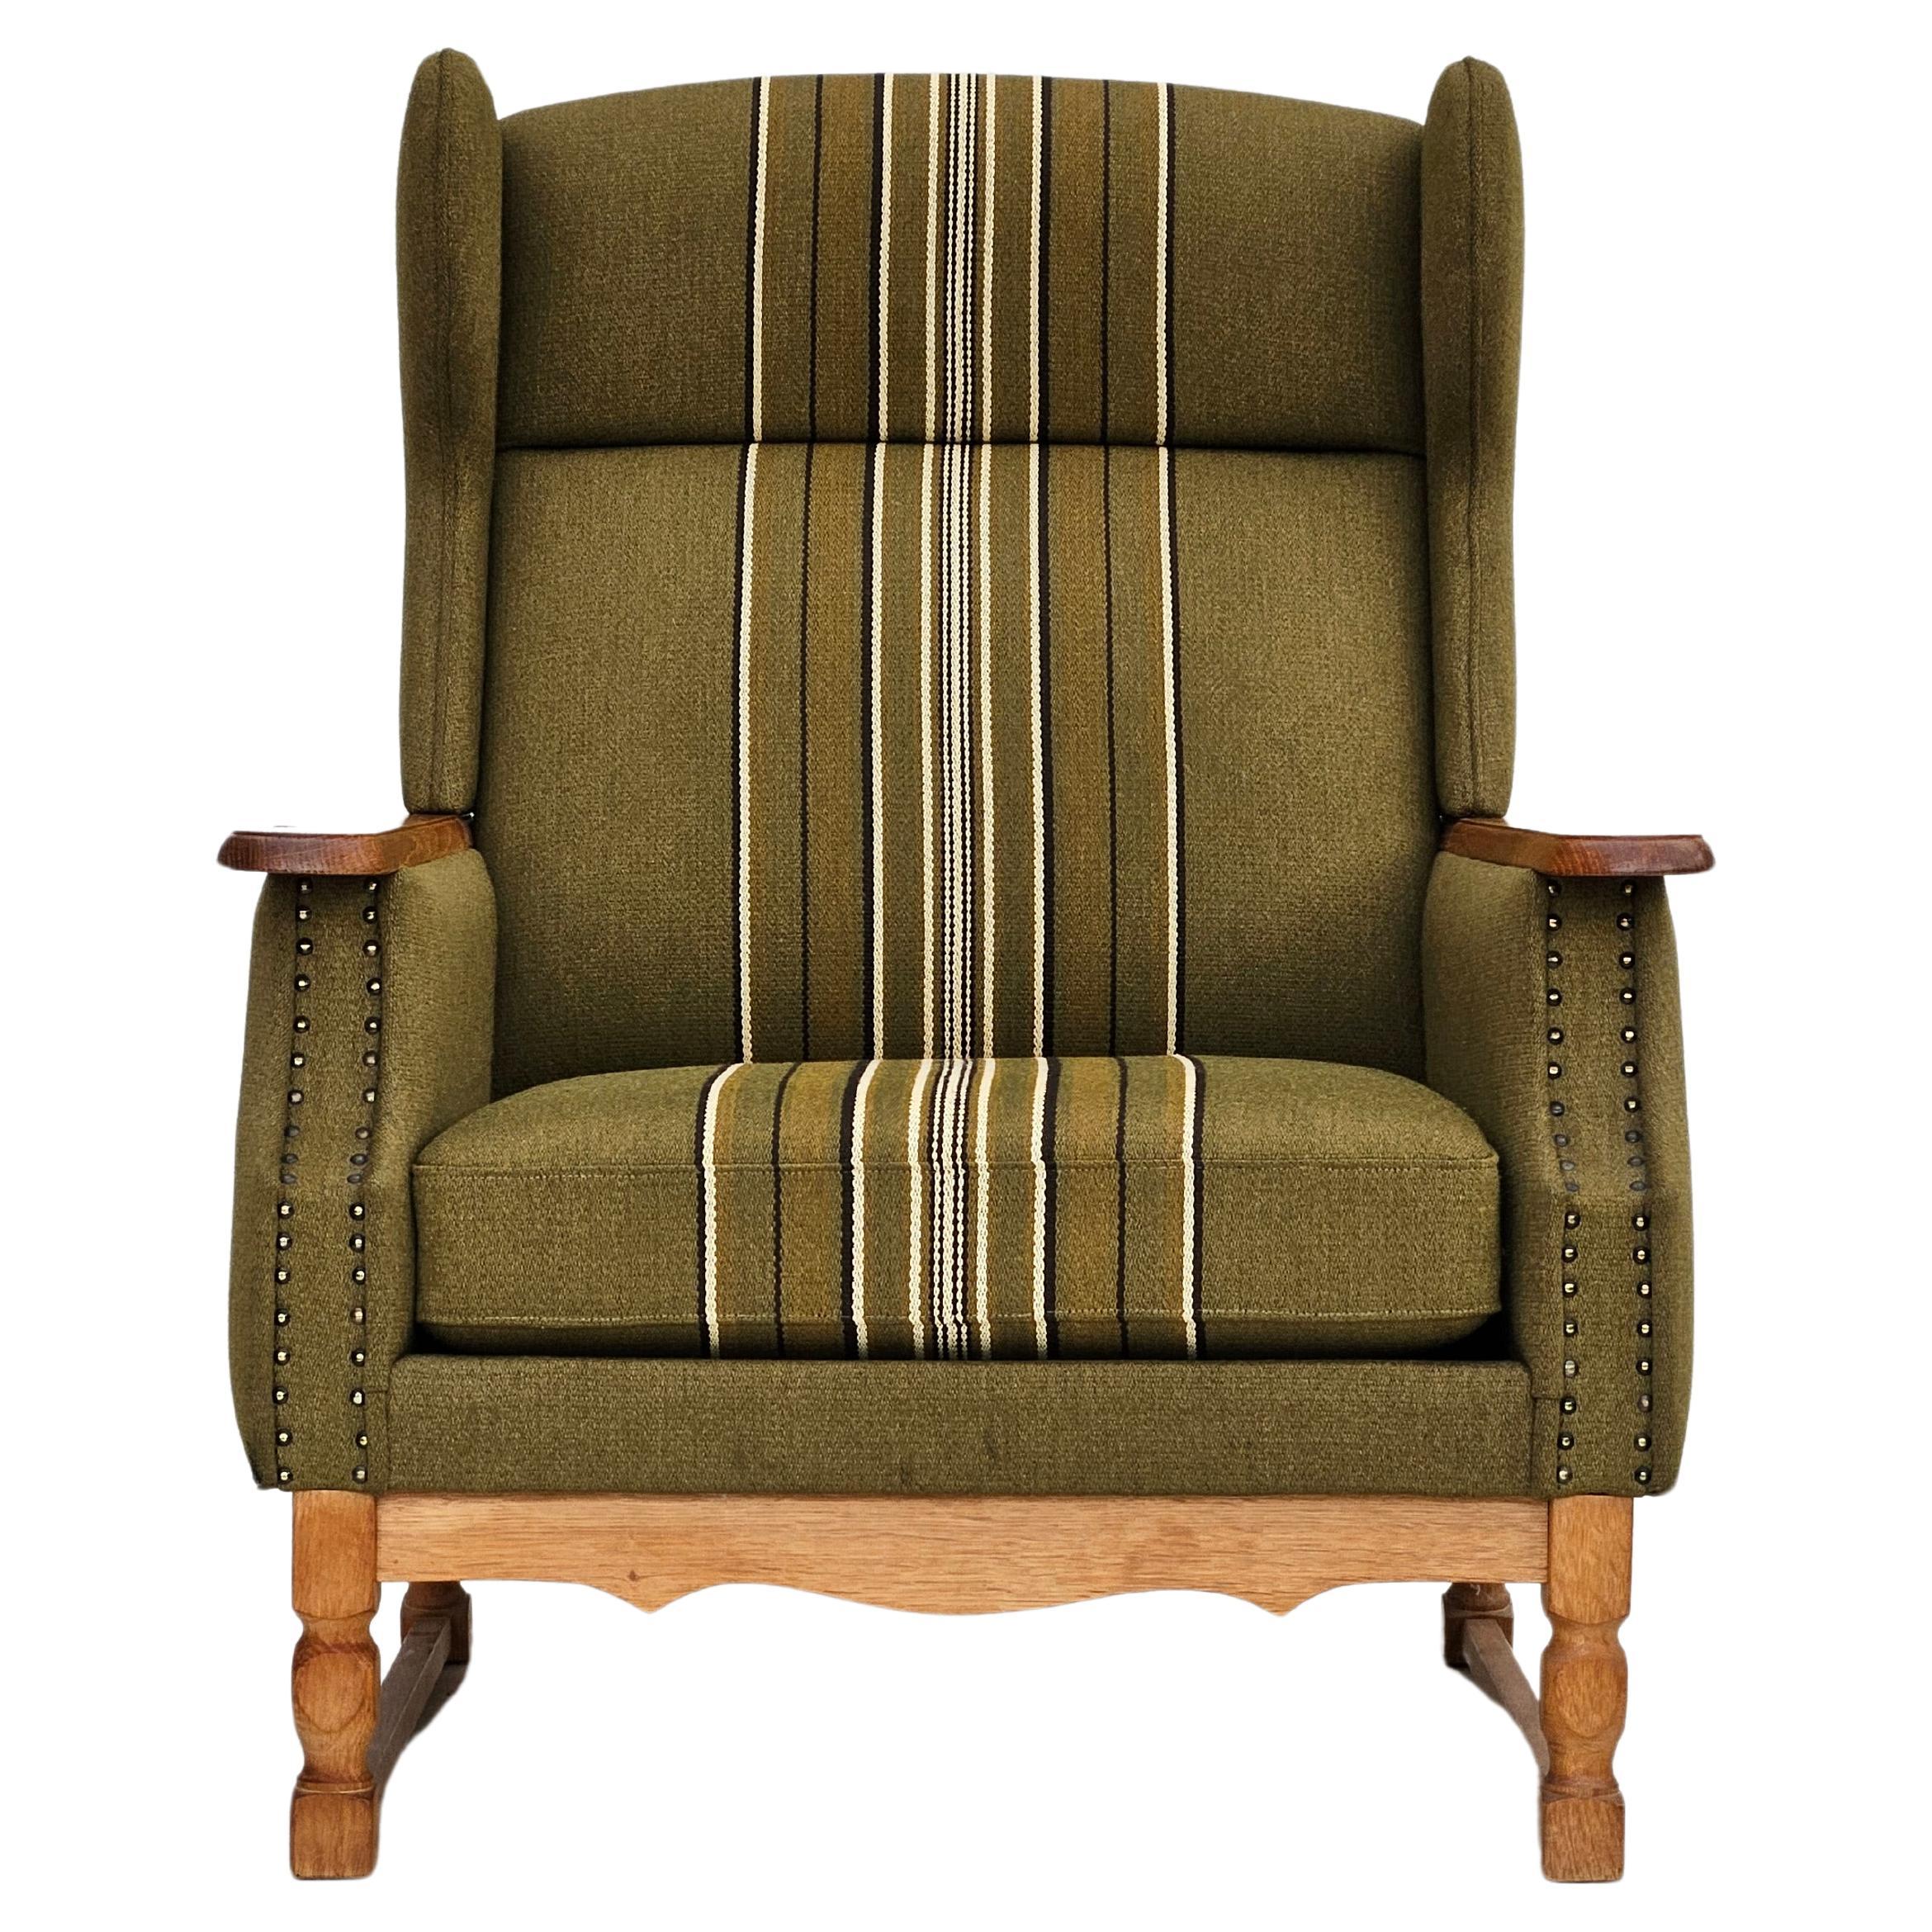 1970s, Danish wingback chair, original upholstery, green furniture wool.